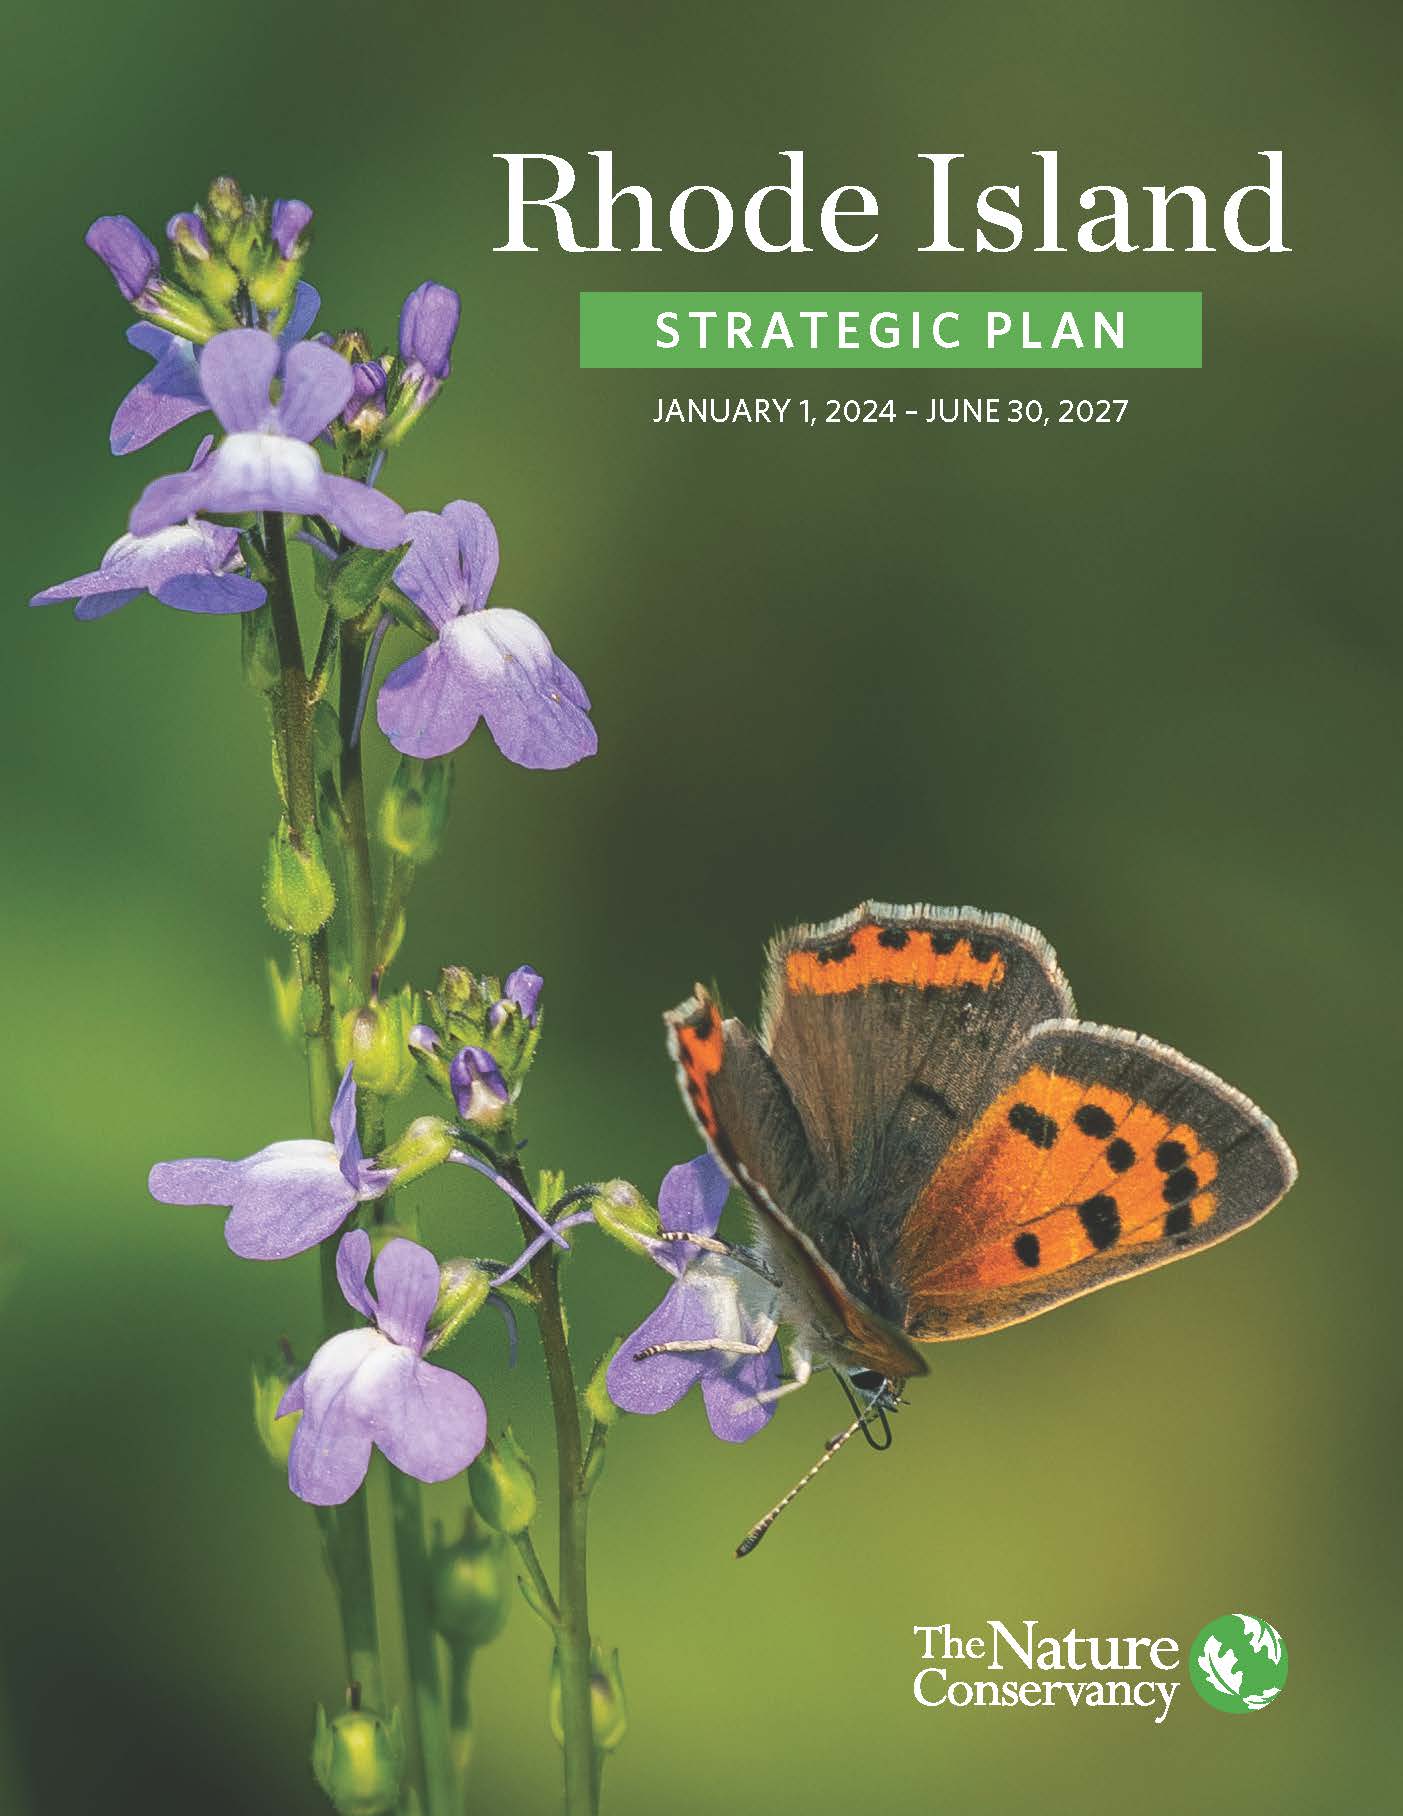 https://www.nature.org/content/dam/tnc/nature/en/photos/rhode-island-strategic-plan-2027-cover.jpg